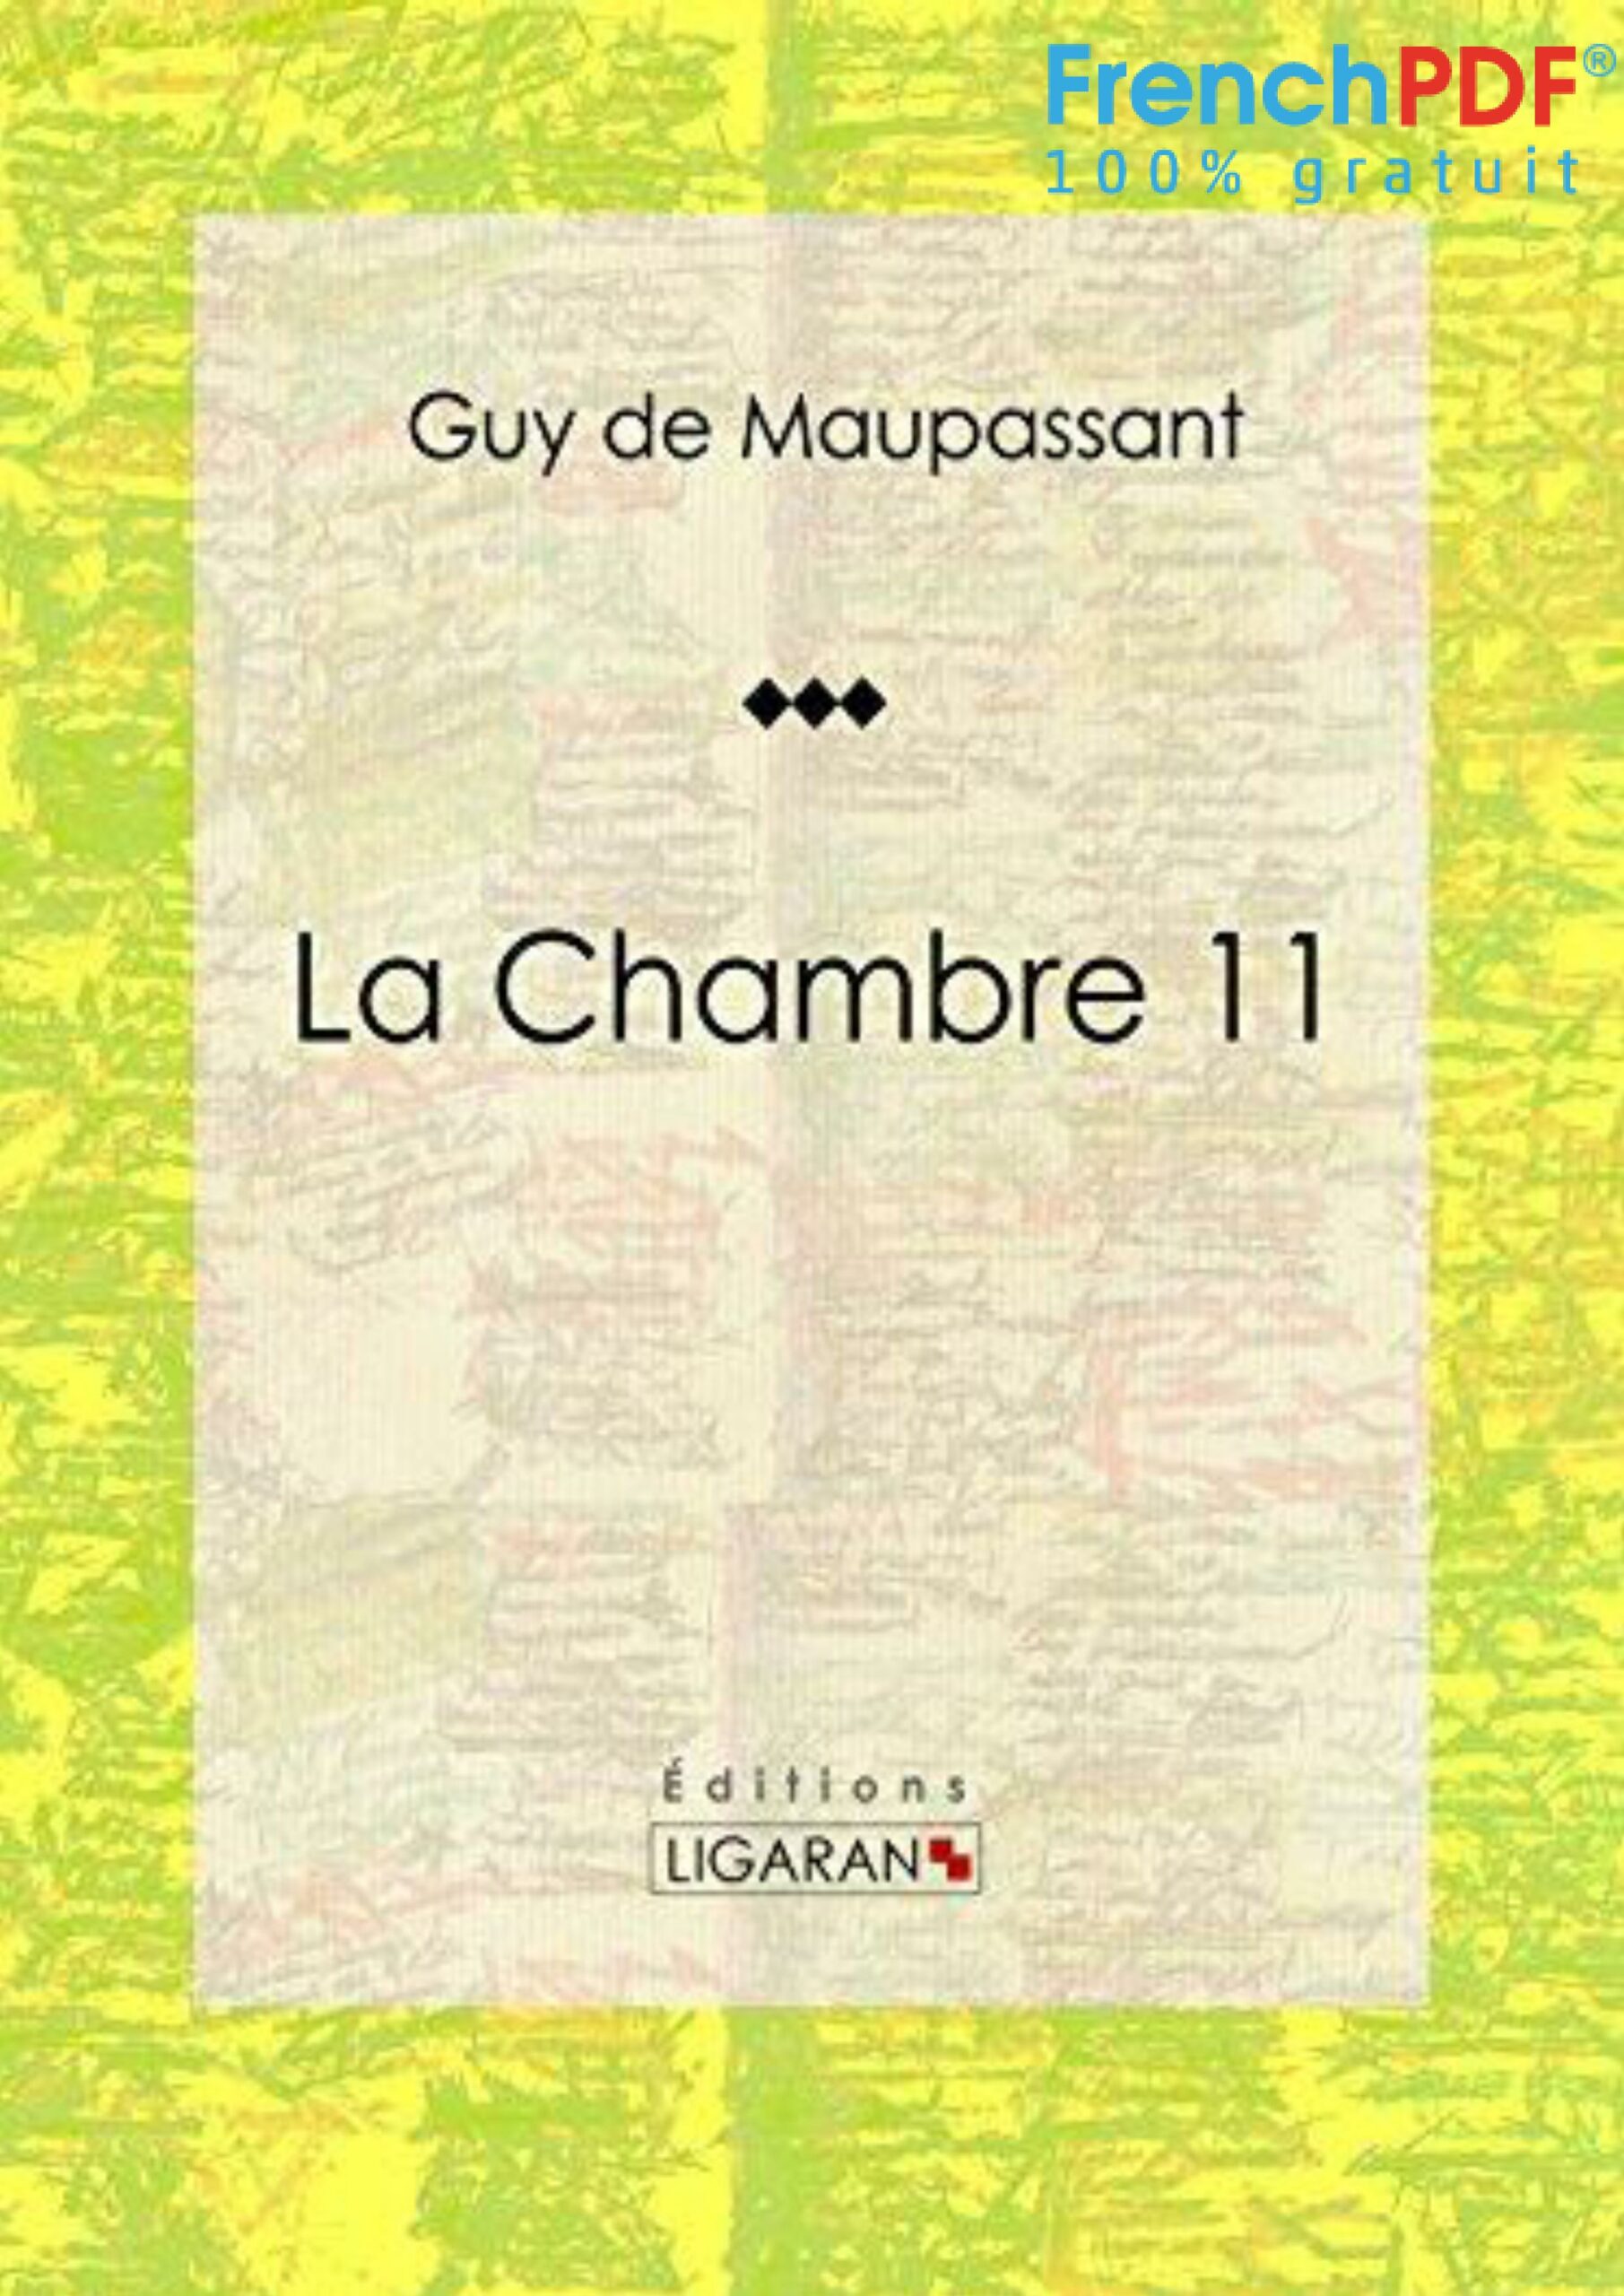 La Chambre 11 - Maupassant - FrenchPDF.com